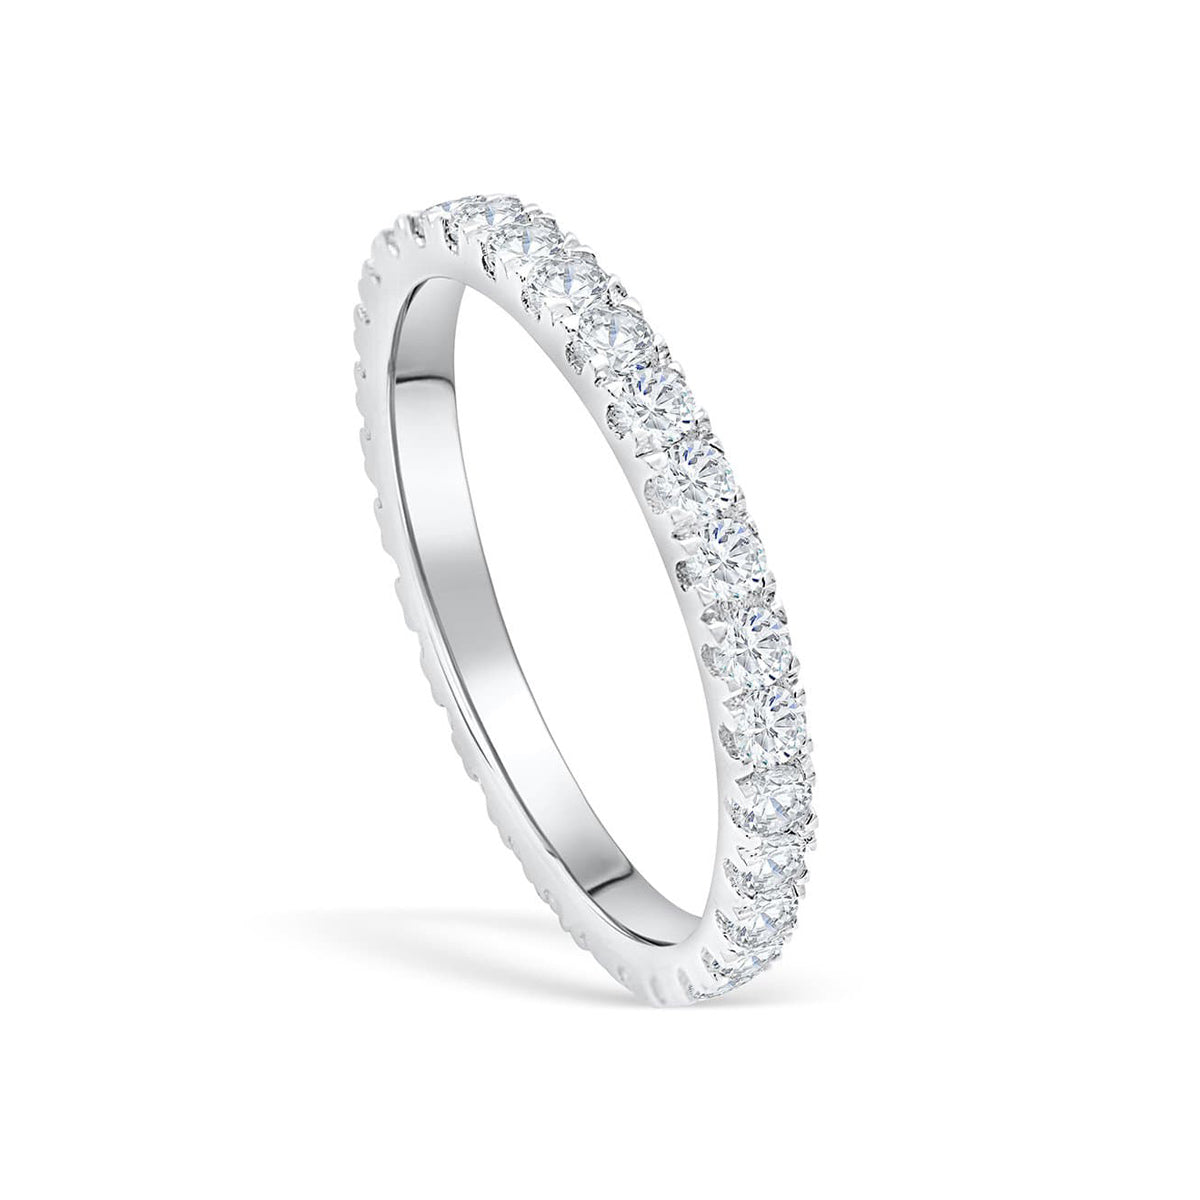 Silver wedding rings | Jewelry Eshop